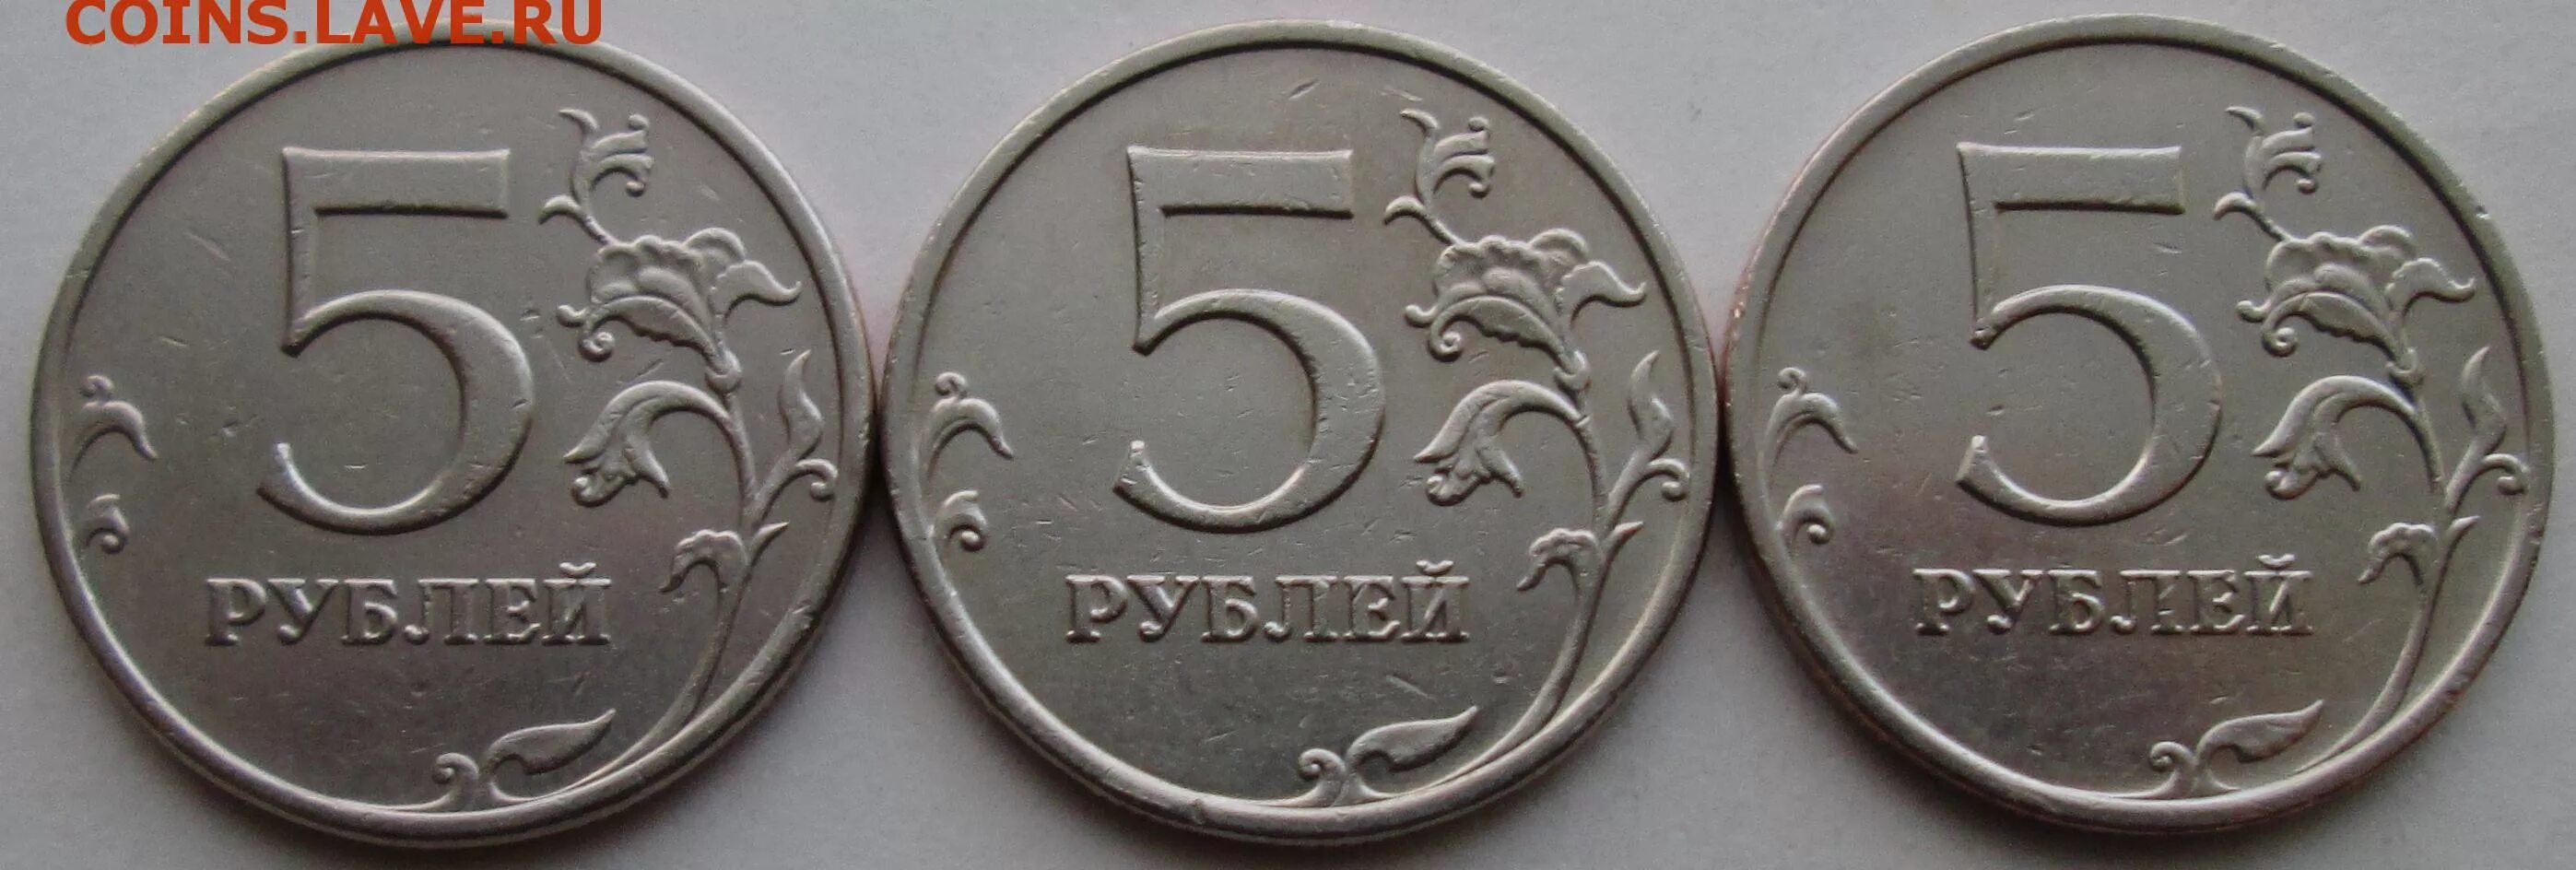 5 рублей 18 года. 5 Рублей большие. 3 Шт 1. 5руб 2009г СПМД магнитная цена на аукционе. Ас24-5-1.